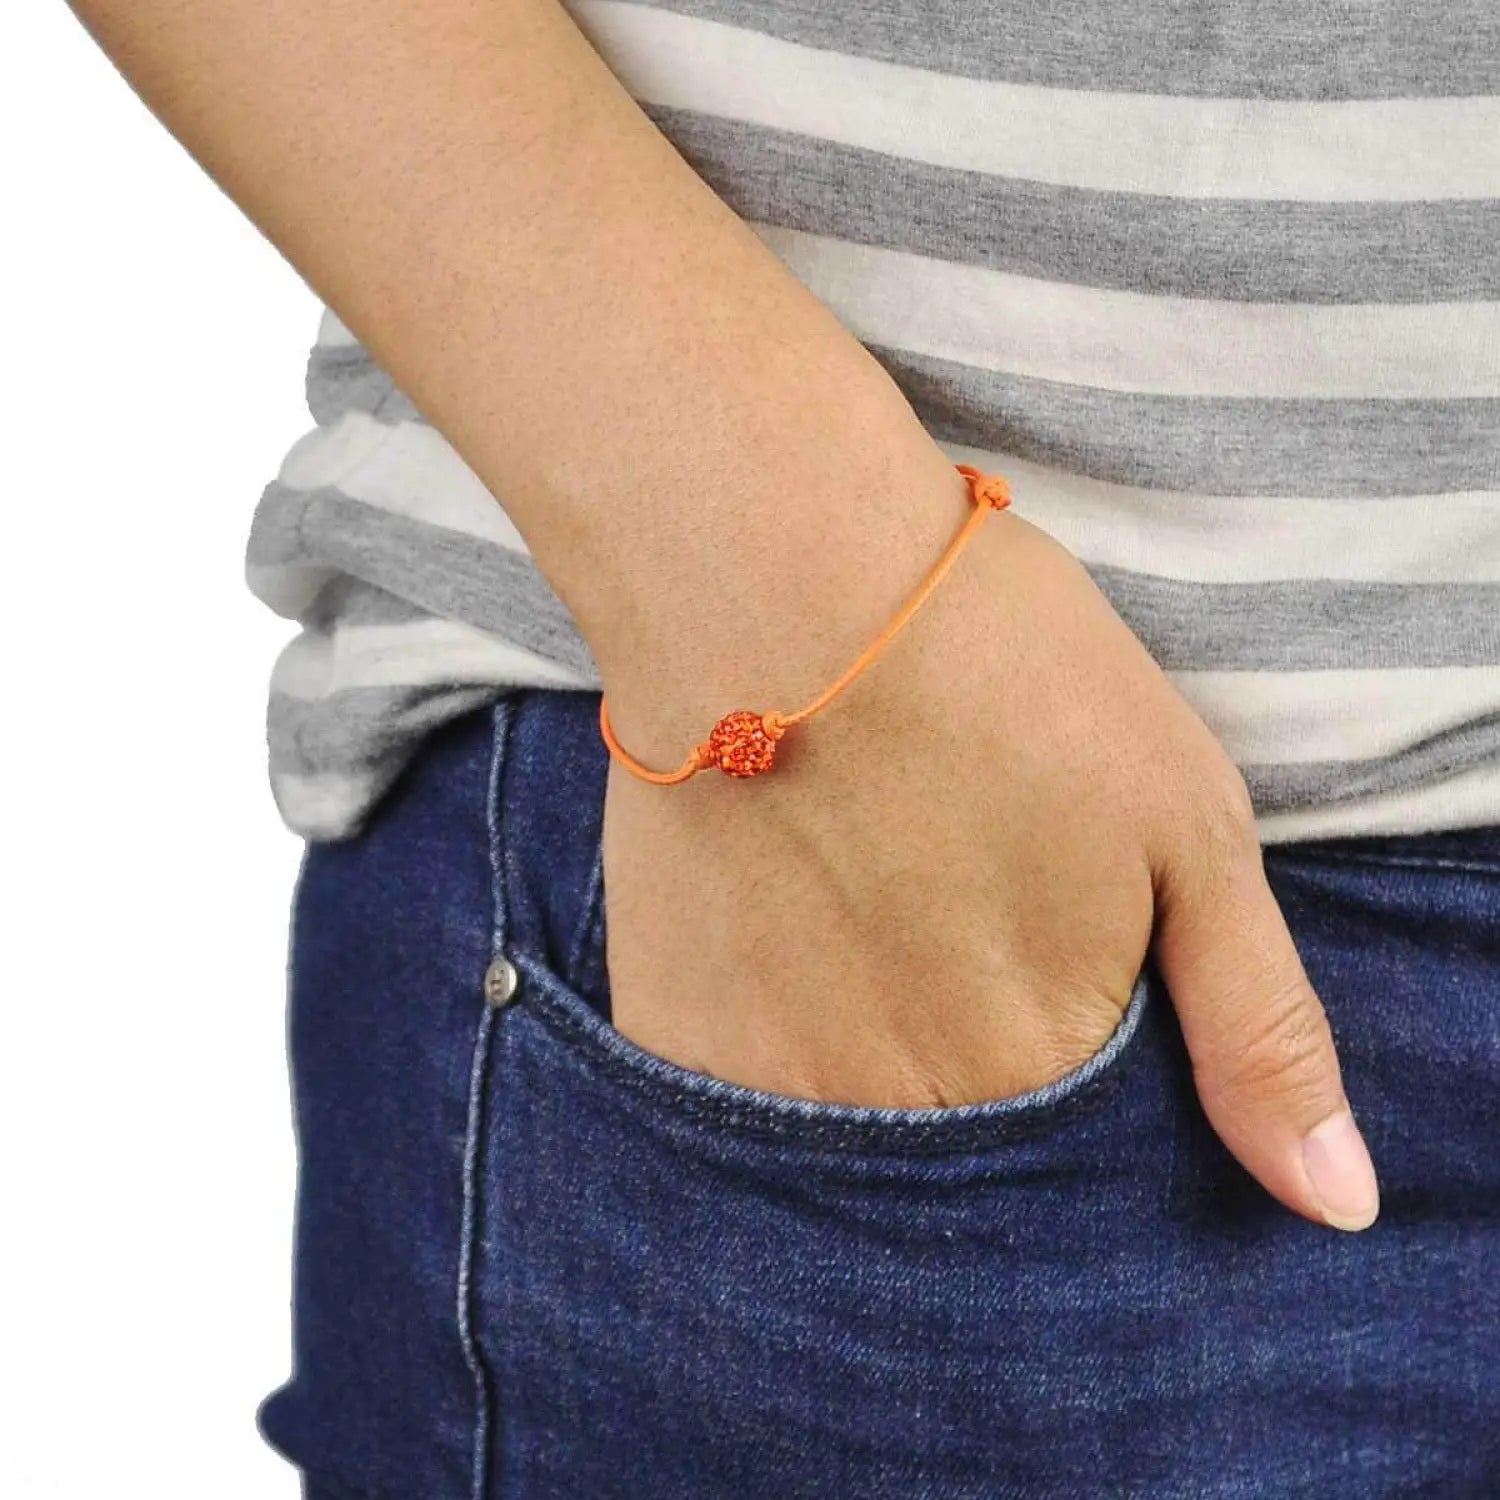 Diamante ball friendship bracelet with orange bow.